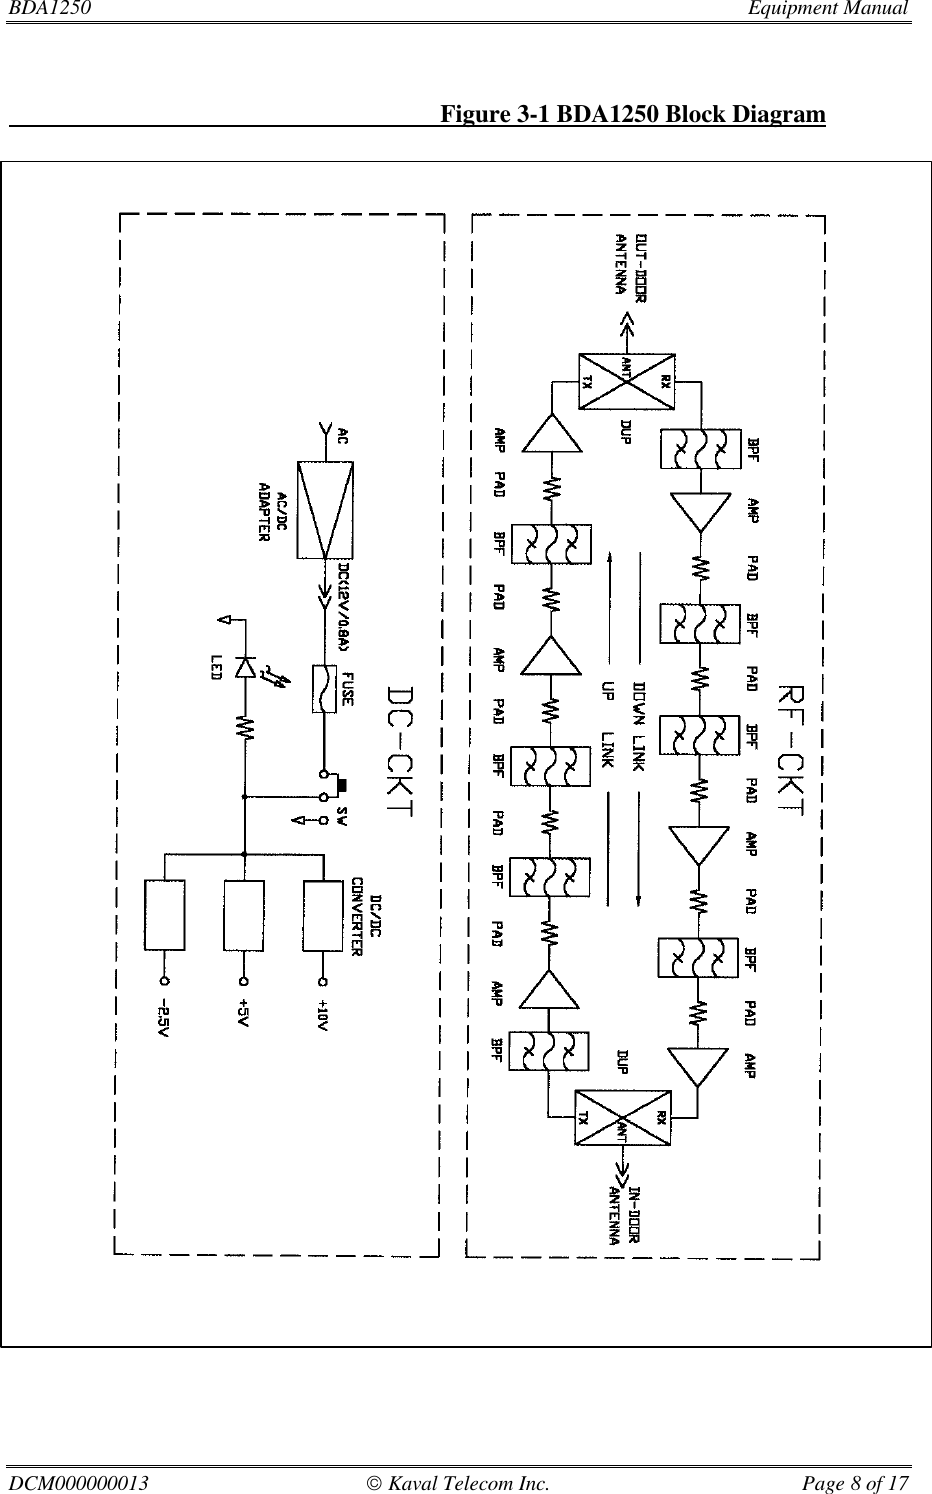 BDA1250  Equipment ManualDCM000000013  Kaval Telecom Inc. Page 8 of 17                                                                     Figure 3-1 BDA1250 Block Diagram